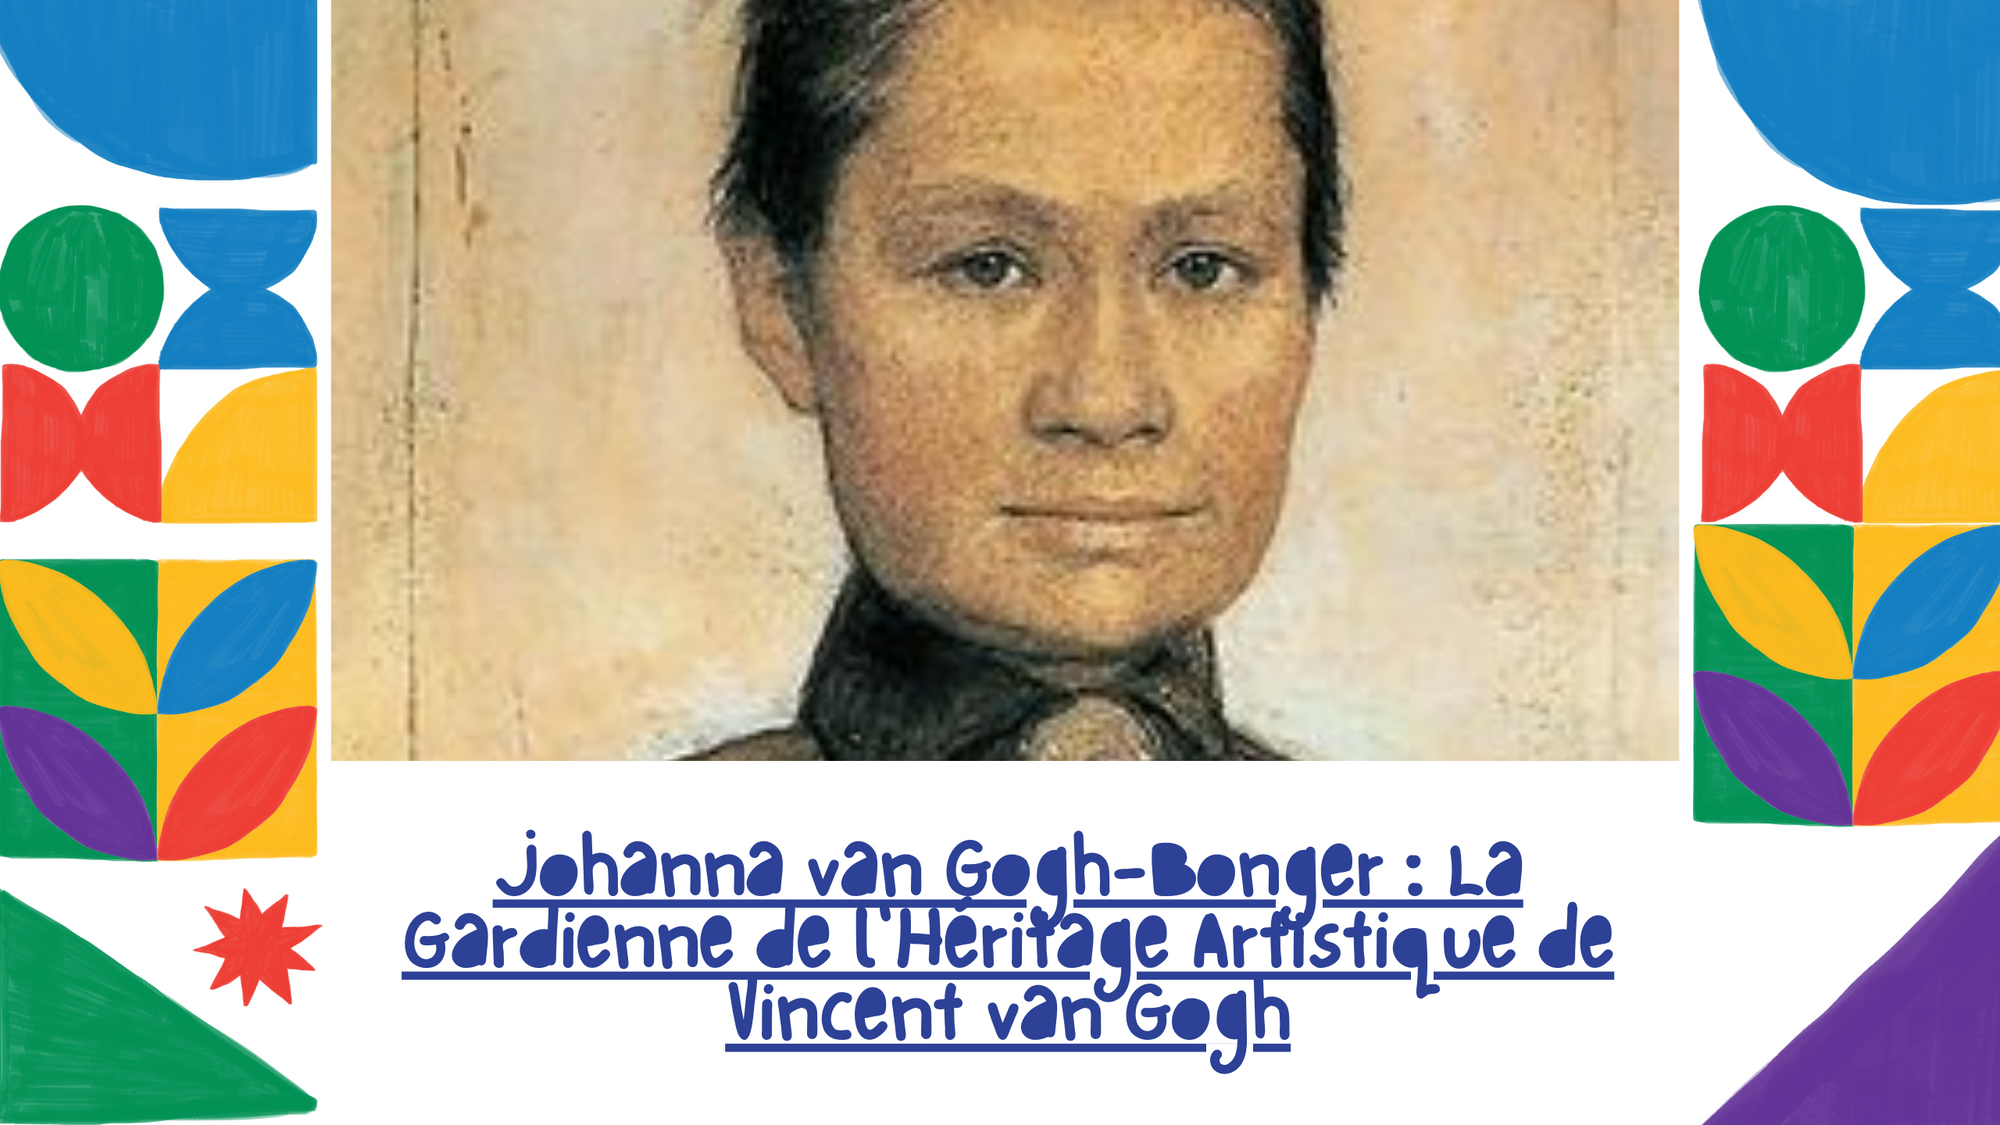 Johanna van Gogh-Bonger : La Gardienne de l'Héritage Artistique de Vincent van Gogh